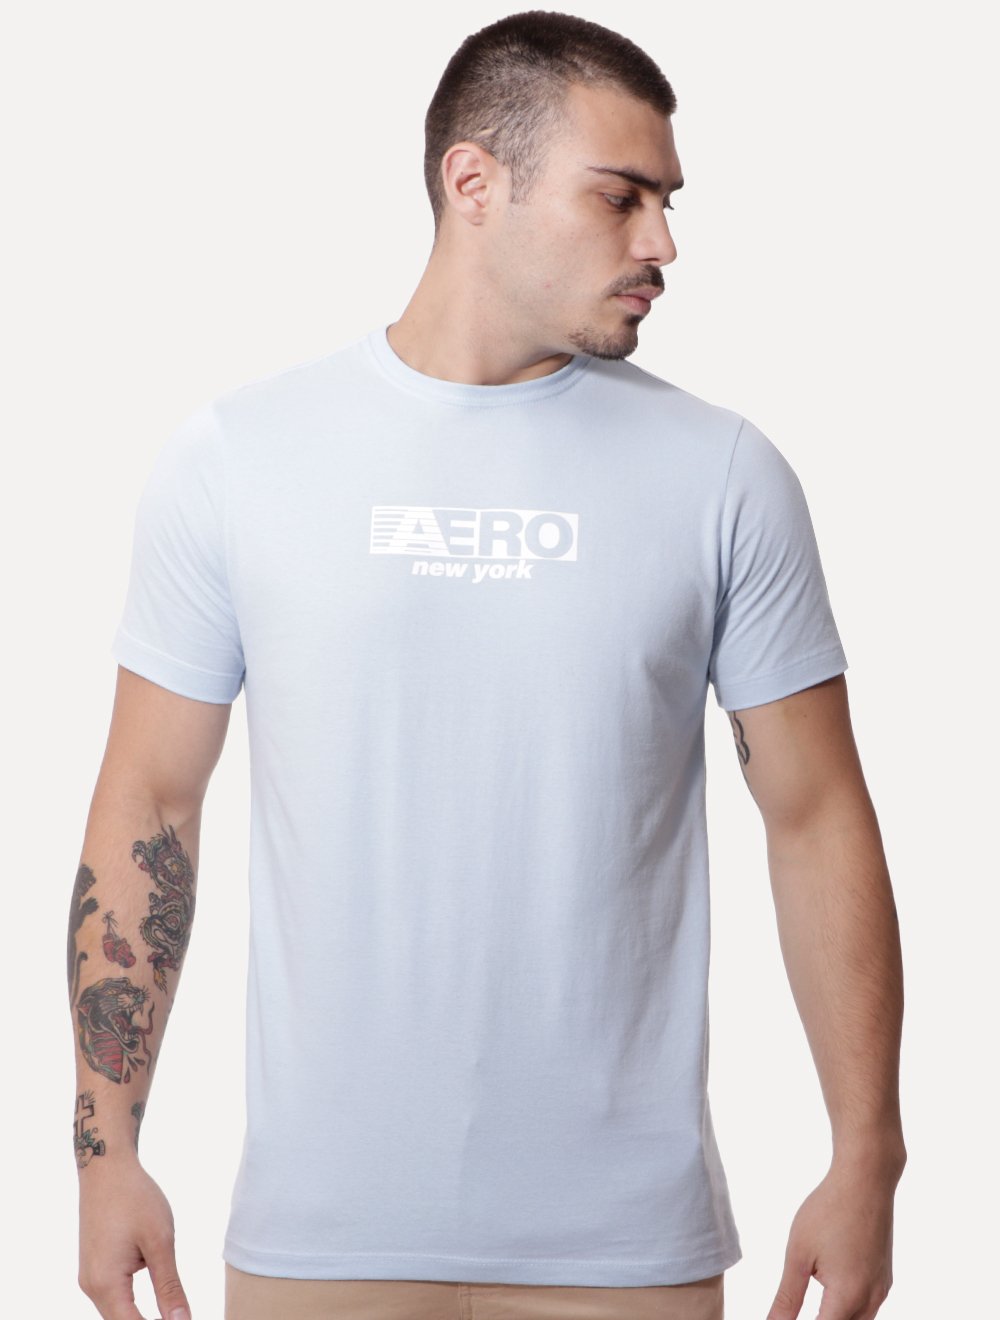 Camiseta Aeropostale Aero Original Brand New York Branca